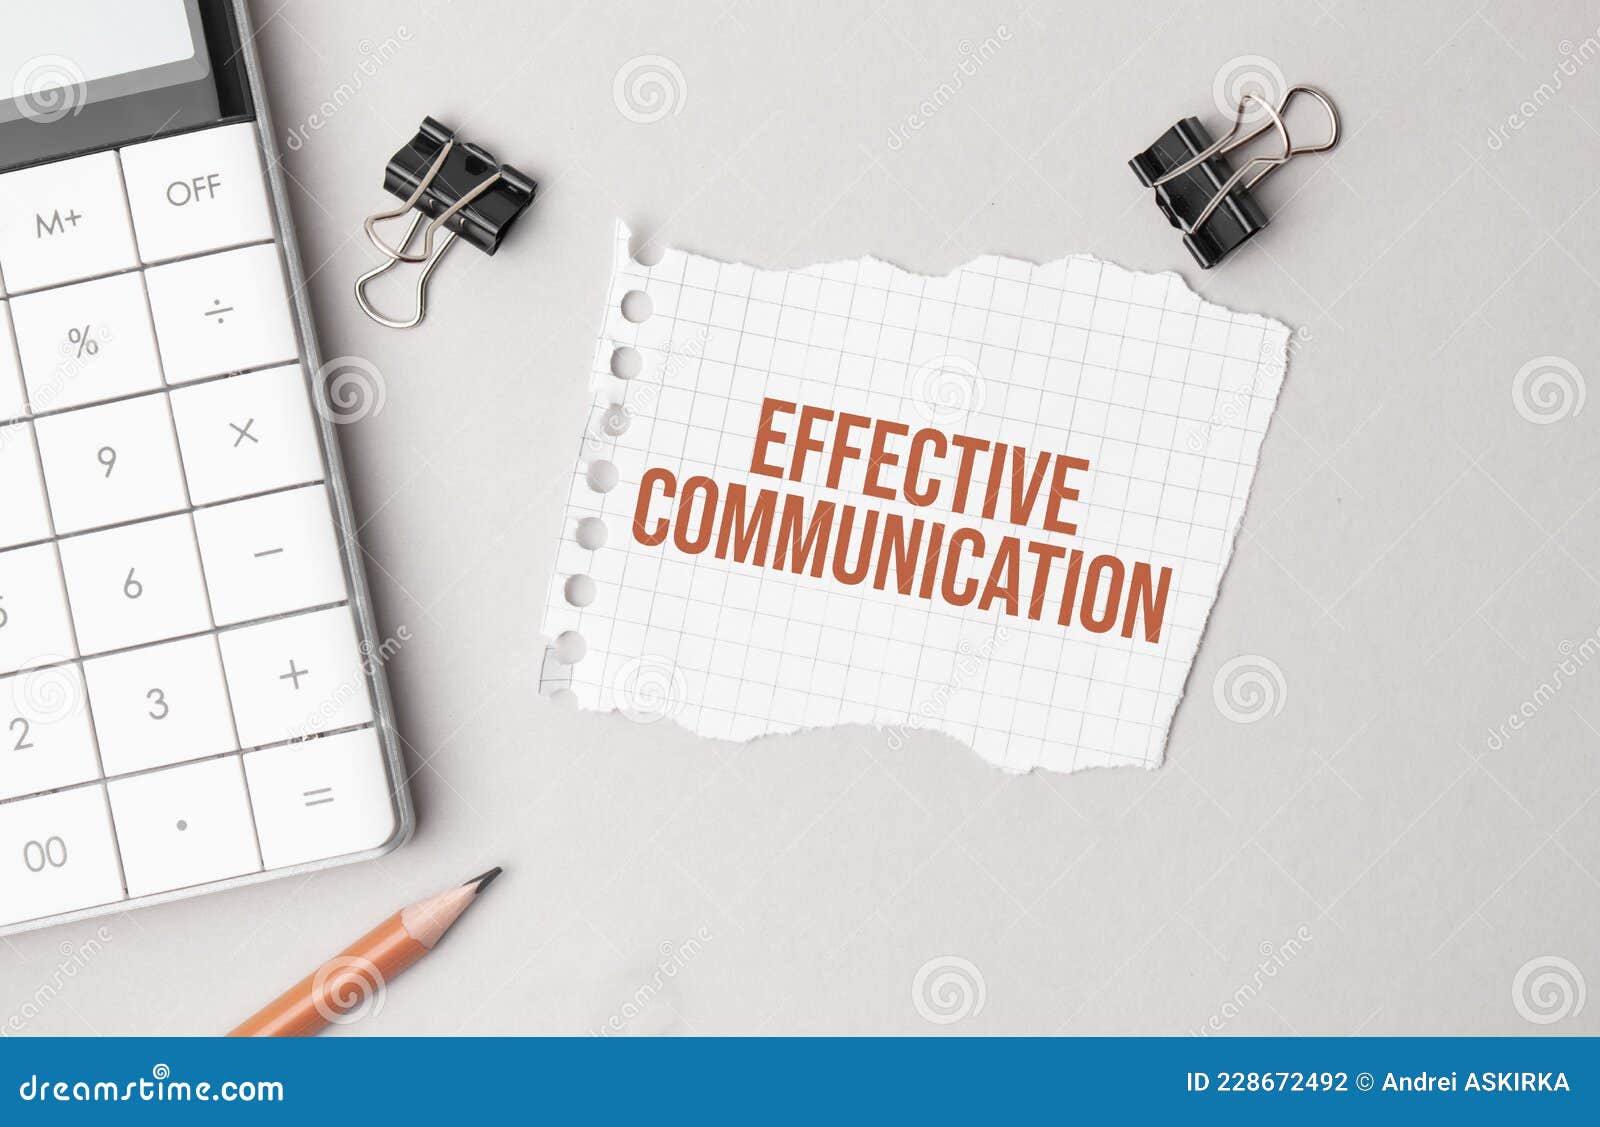 effective communication paper